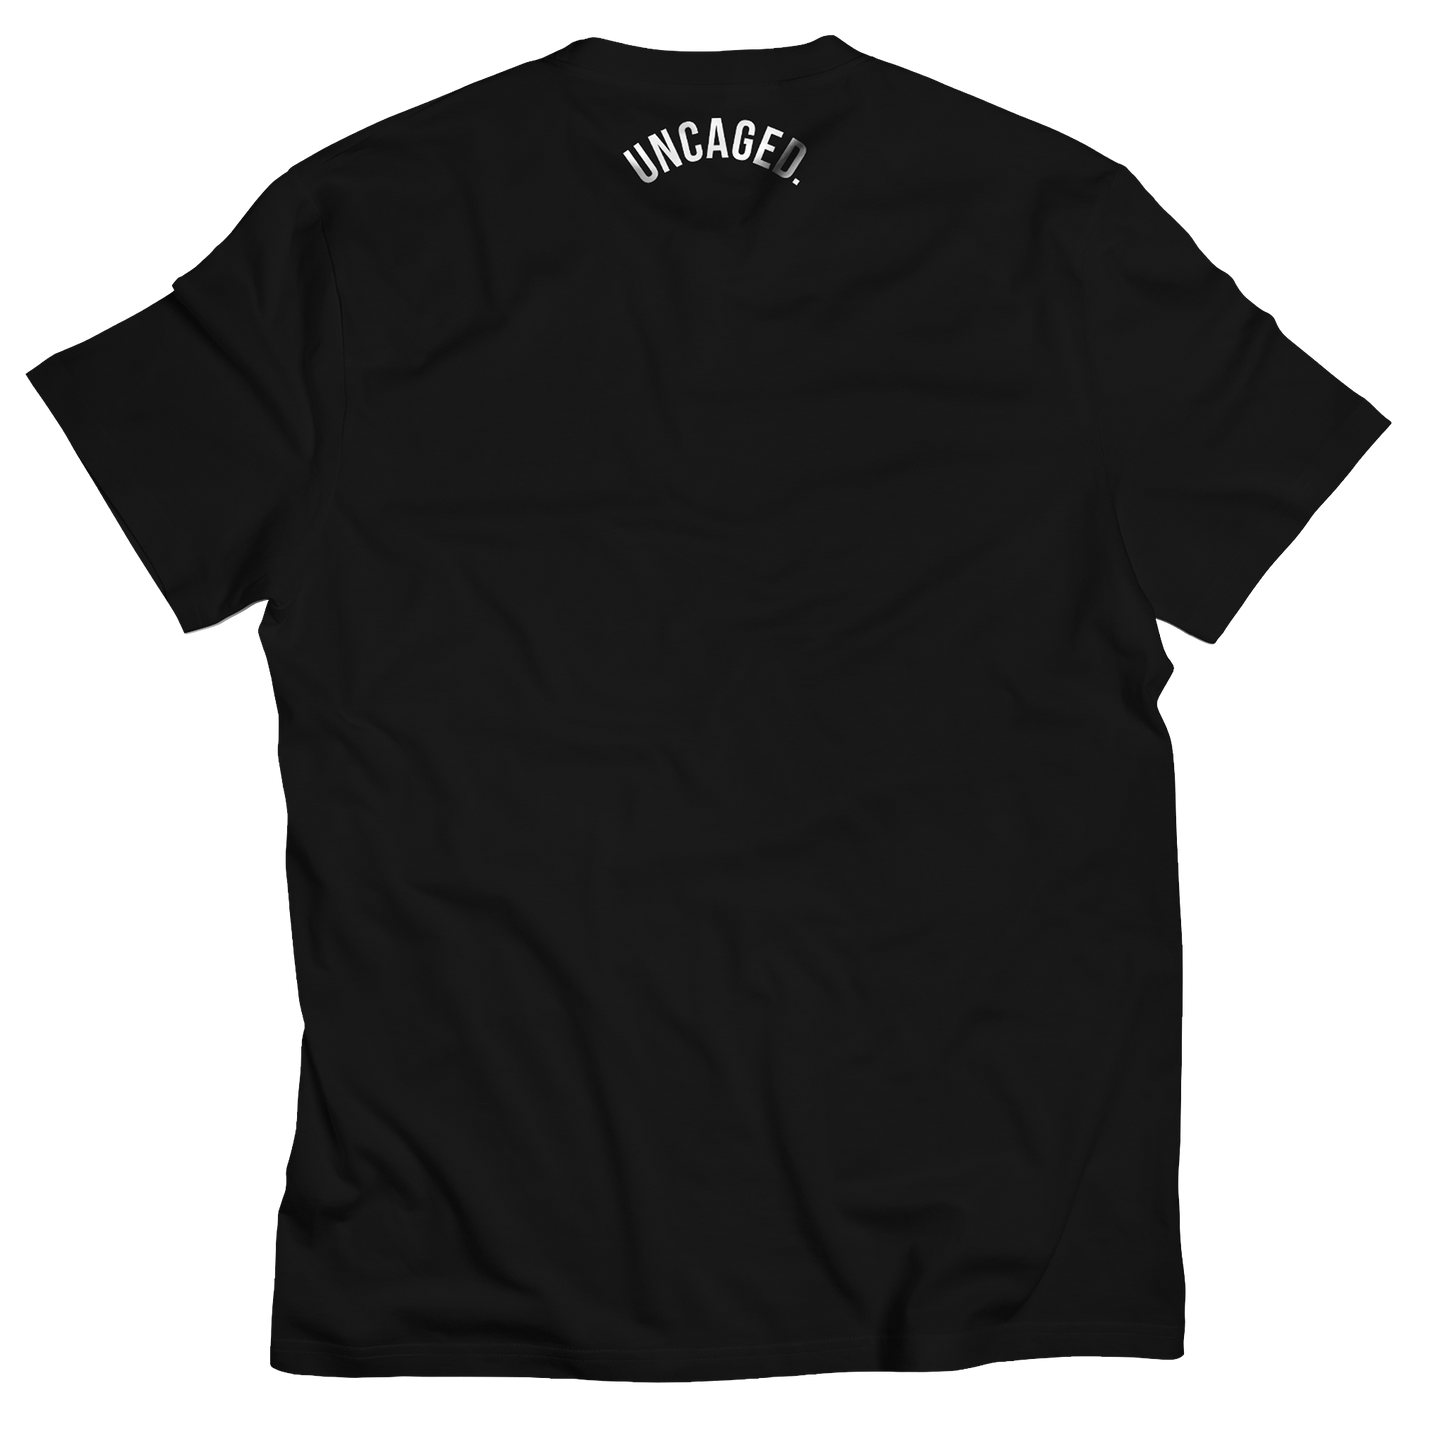 Rake Squad T-Shirt - Black/White